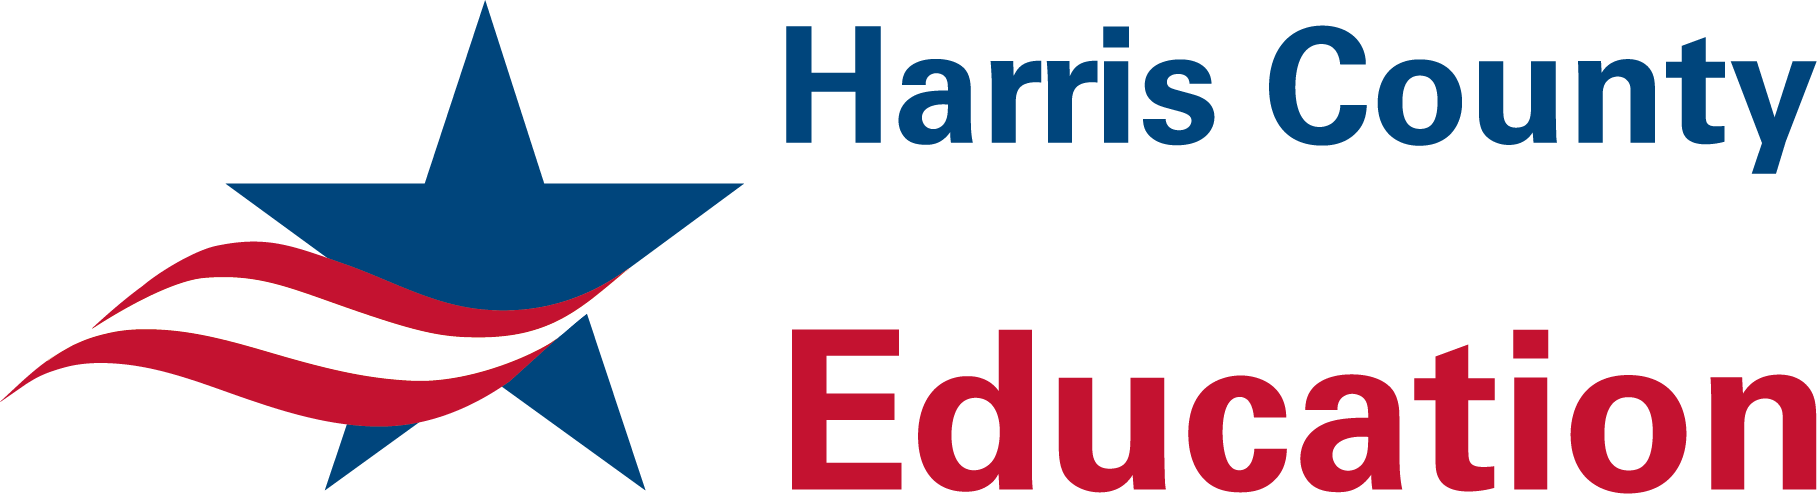 Harris County Department of Education Company Logo